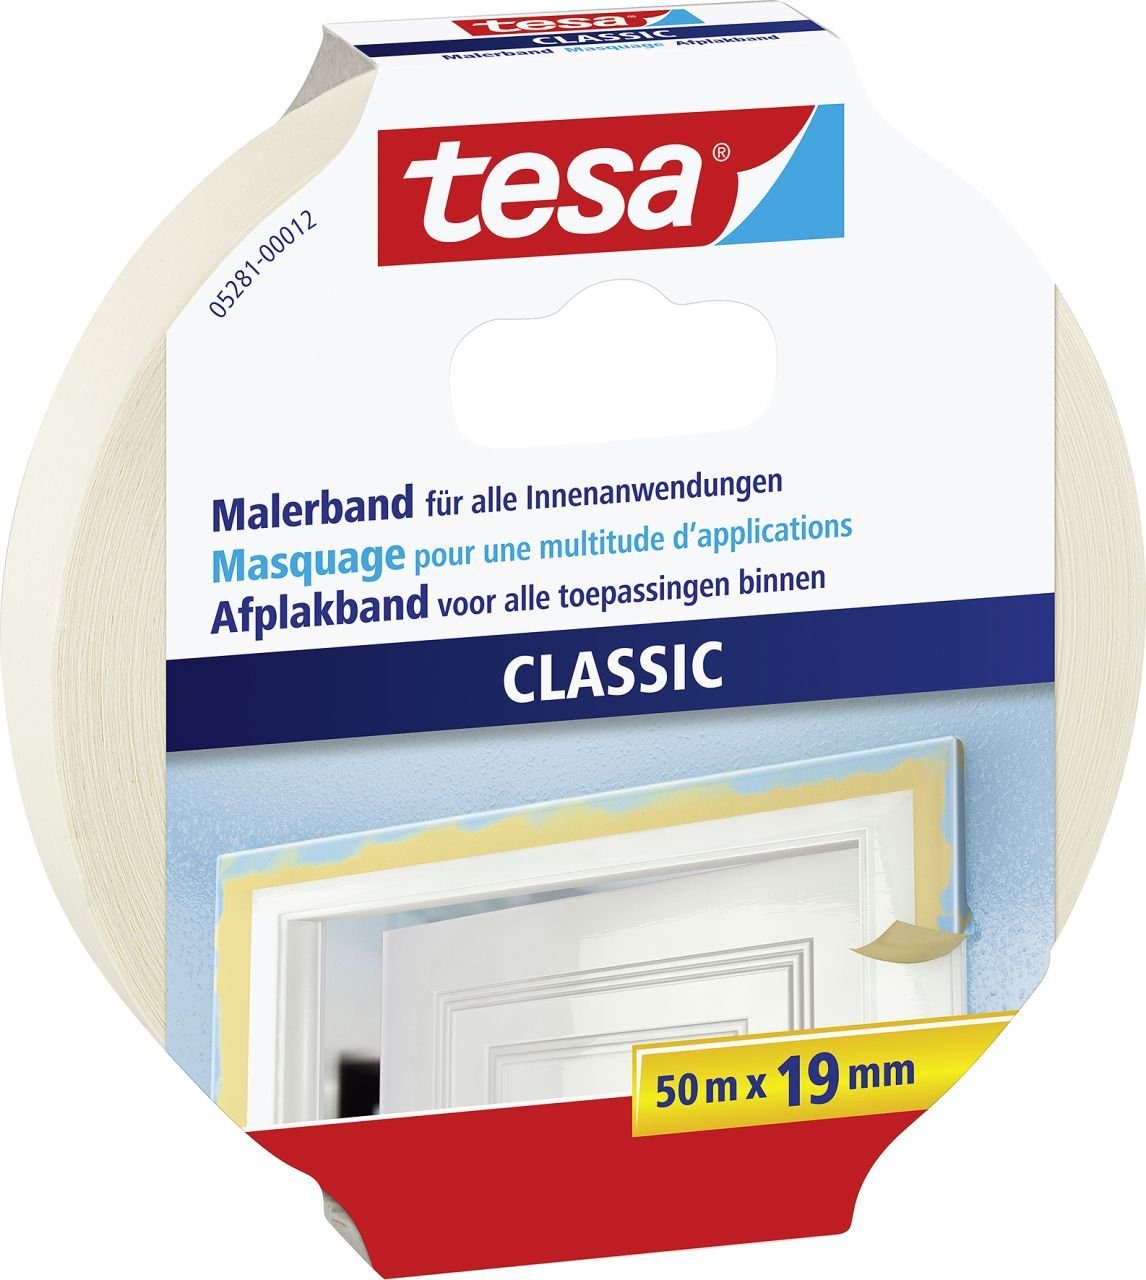 tesa Kreppband tesa Malerkreppband Classic 50 m x 19 mm, beige